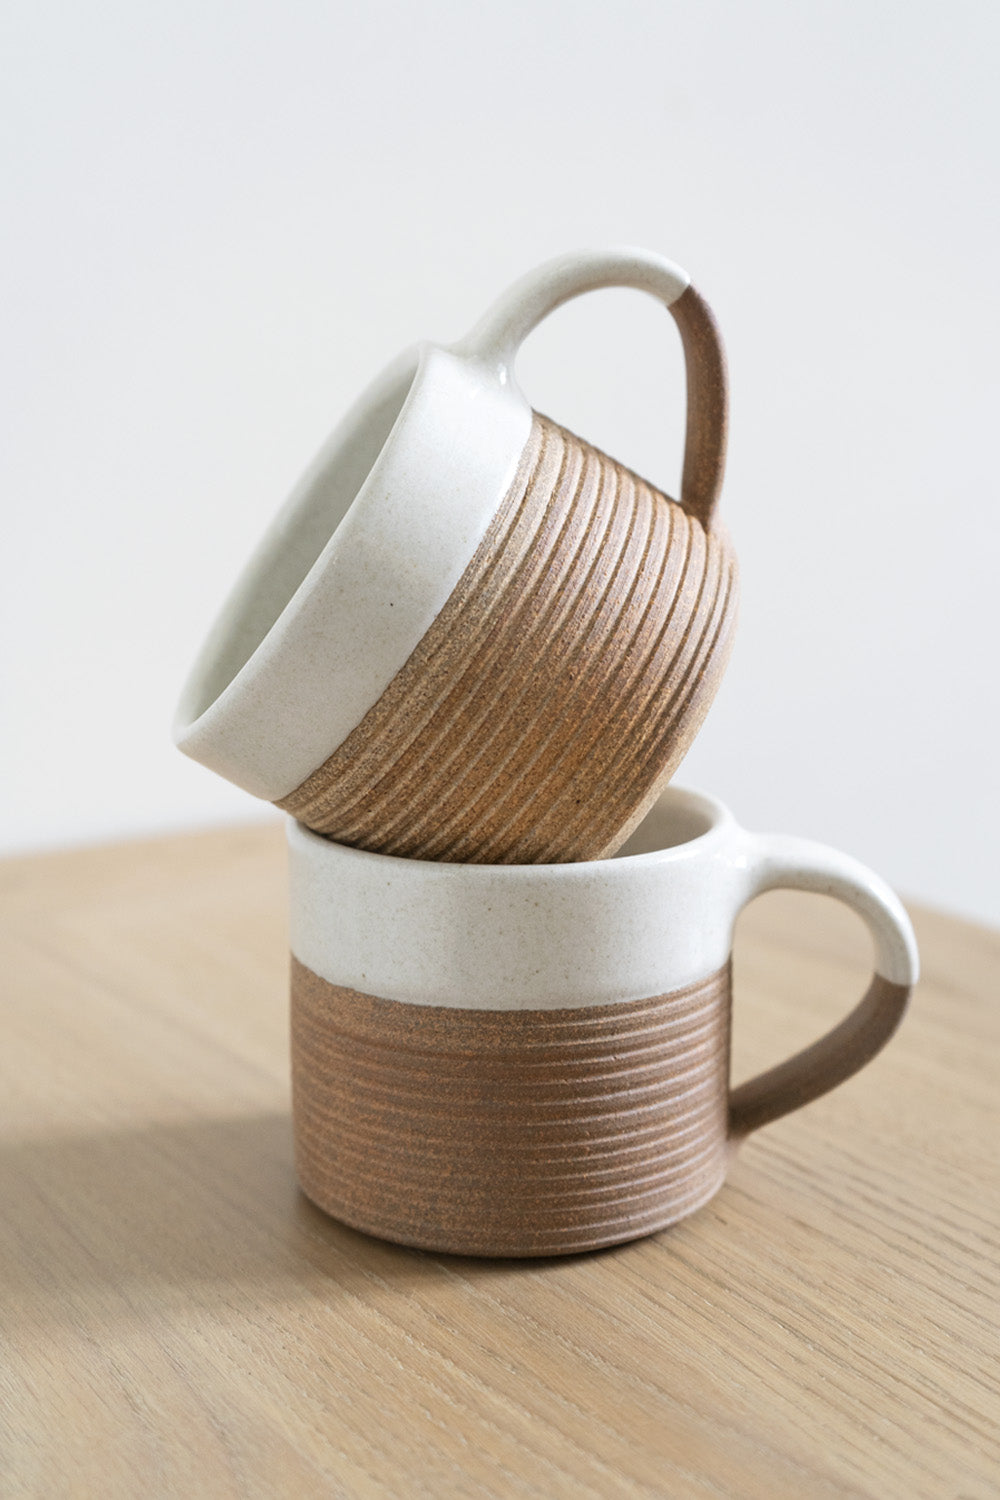 Mali Ribbed White & Terracotta Mug